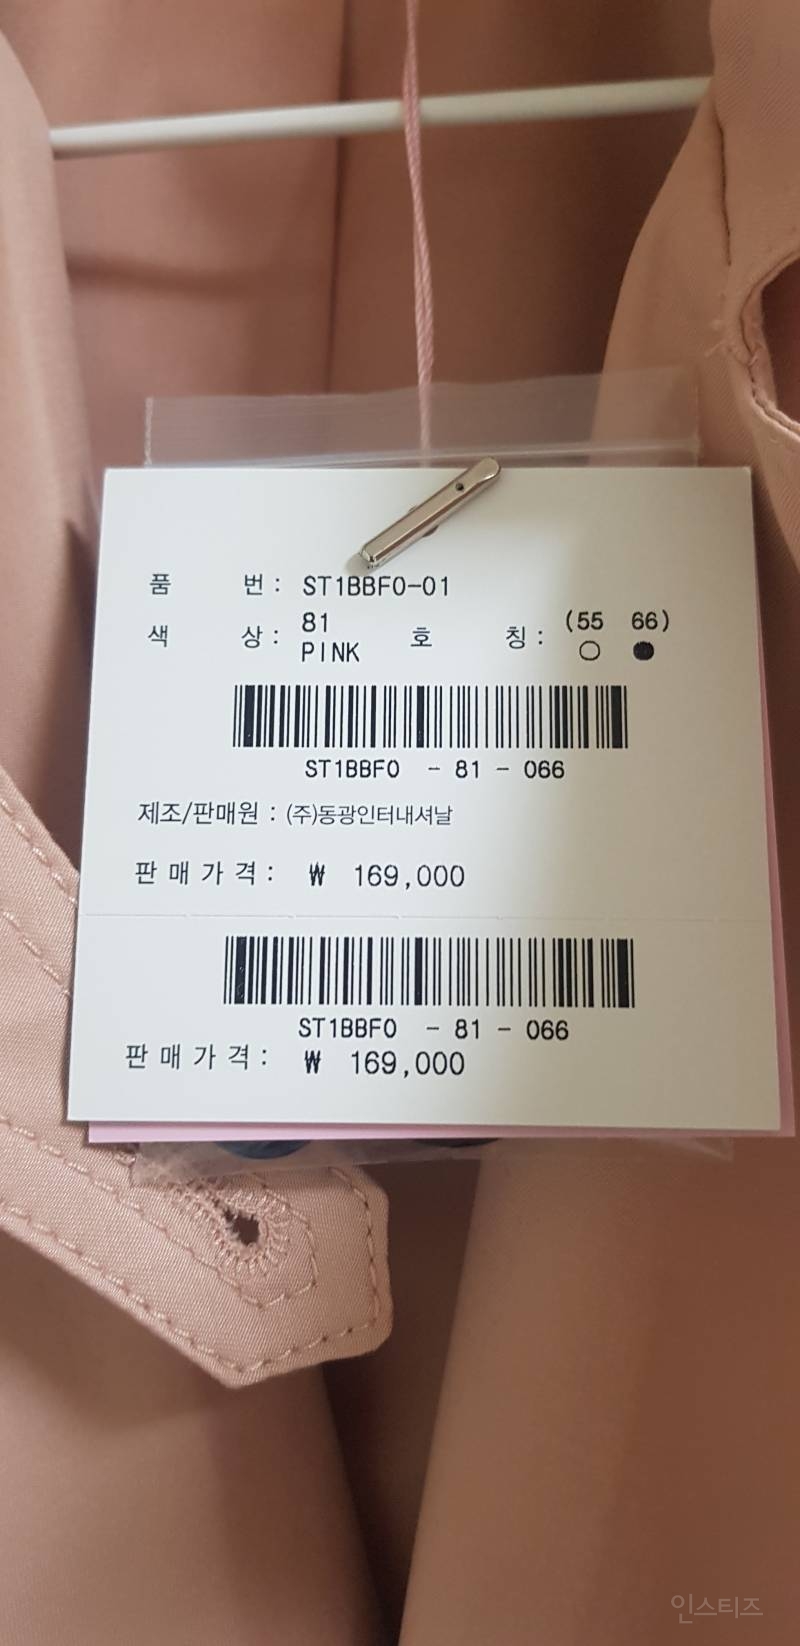 SOUP 인디핑크 트렌치 코트 할인판매중 | 인스티즈